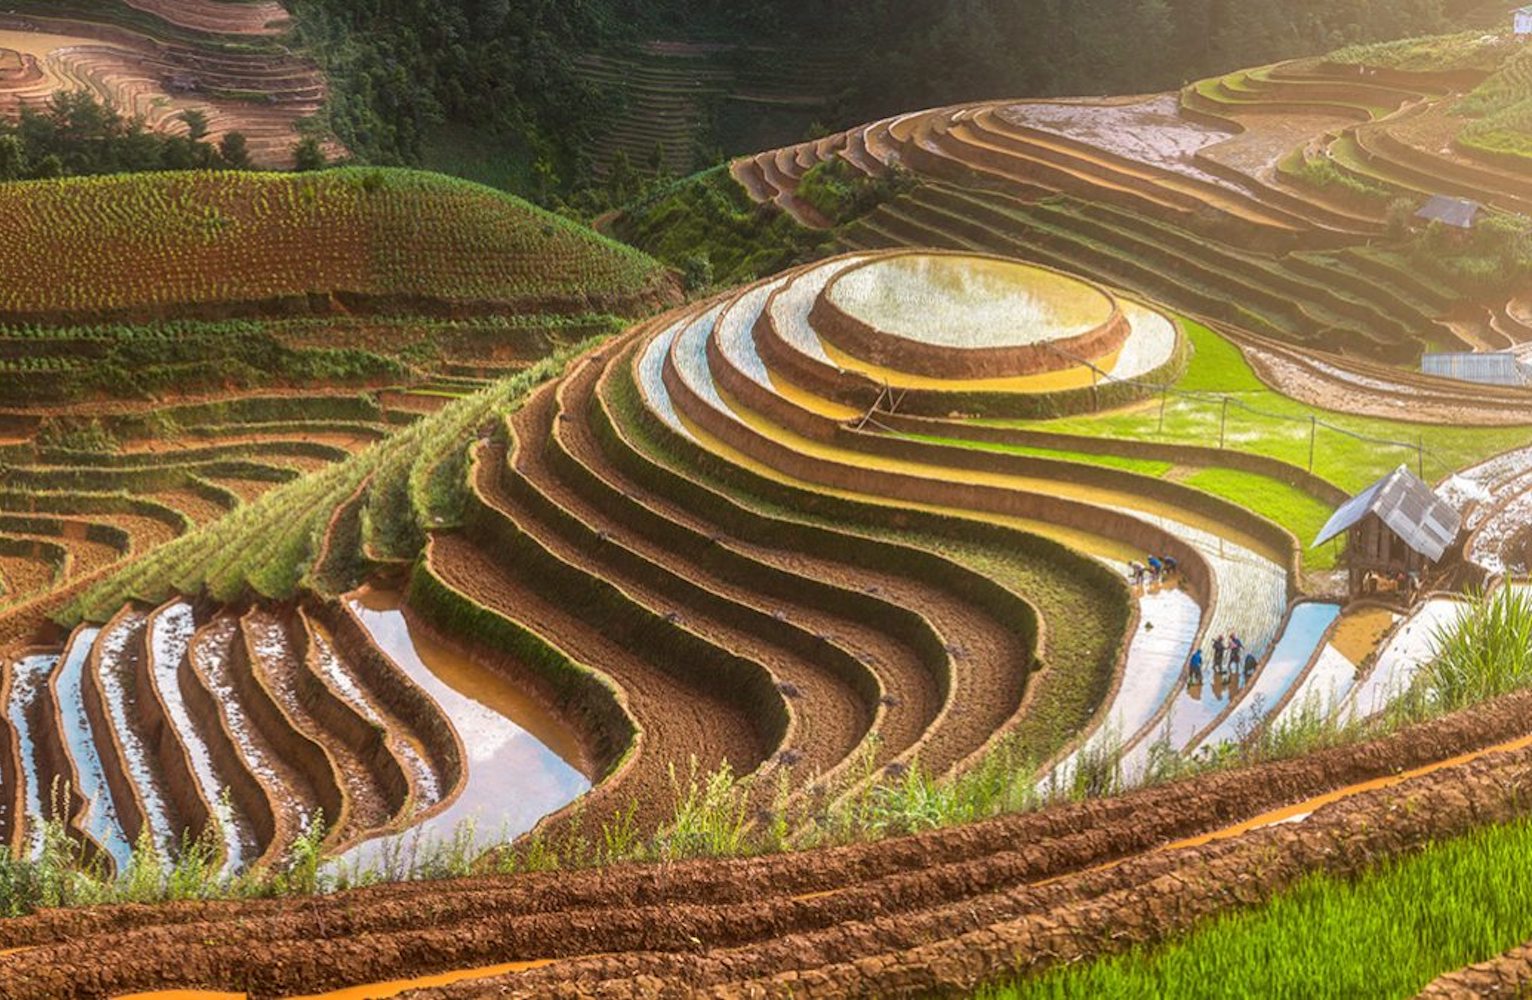 A hillside in Vietnam